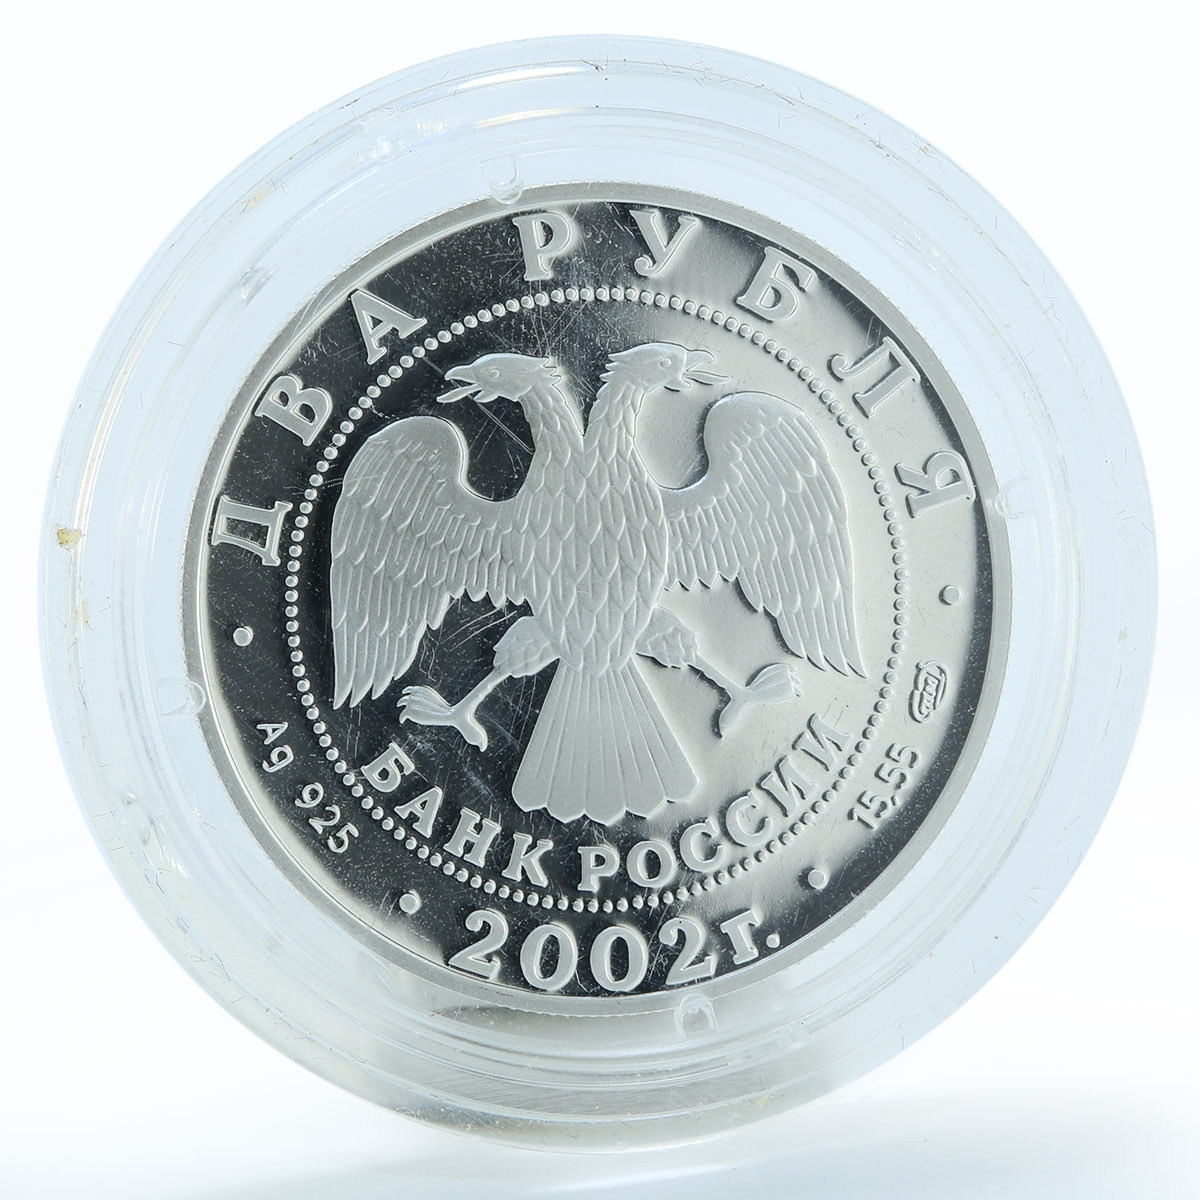 Russia 2 rubles Signs of Zodiac Sagittarius proof silver coin 2002